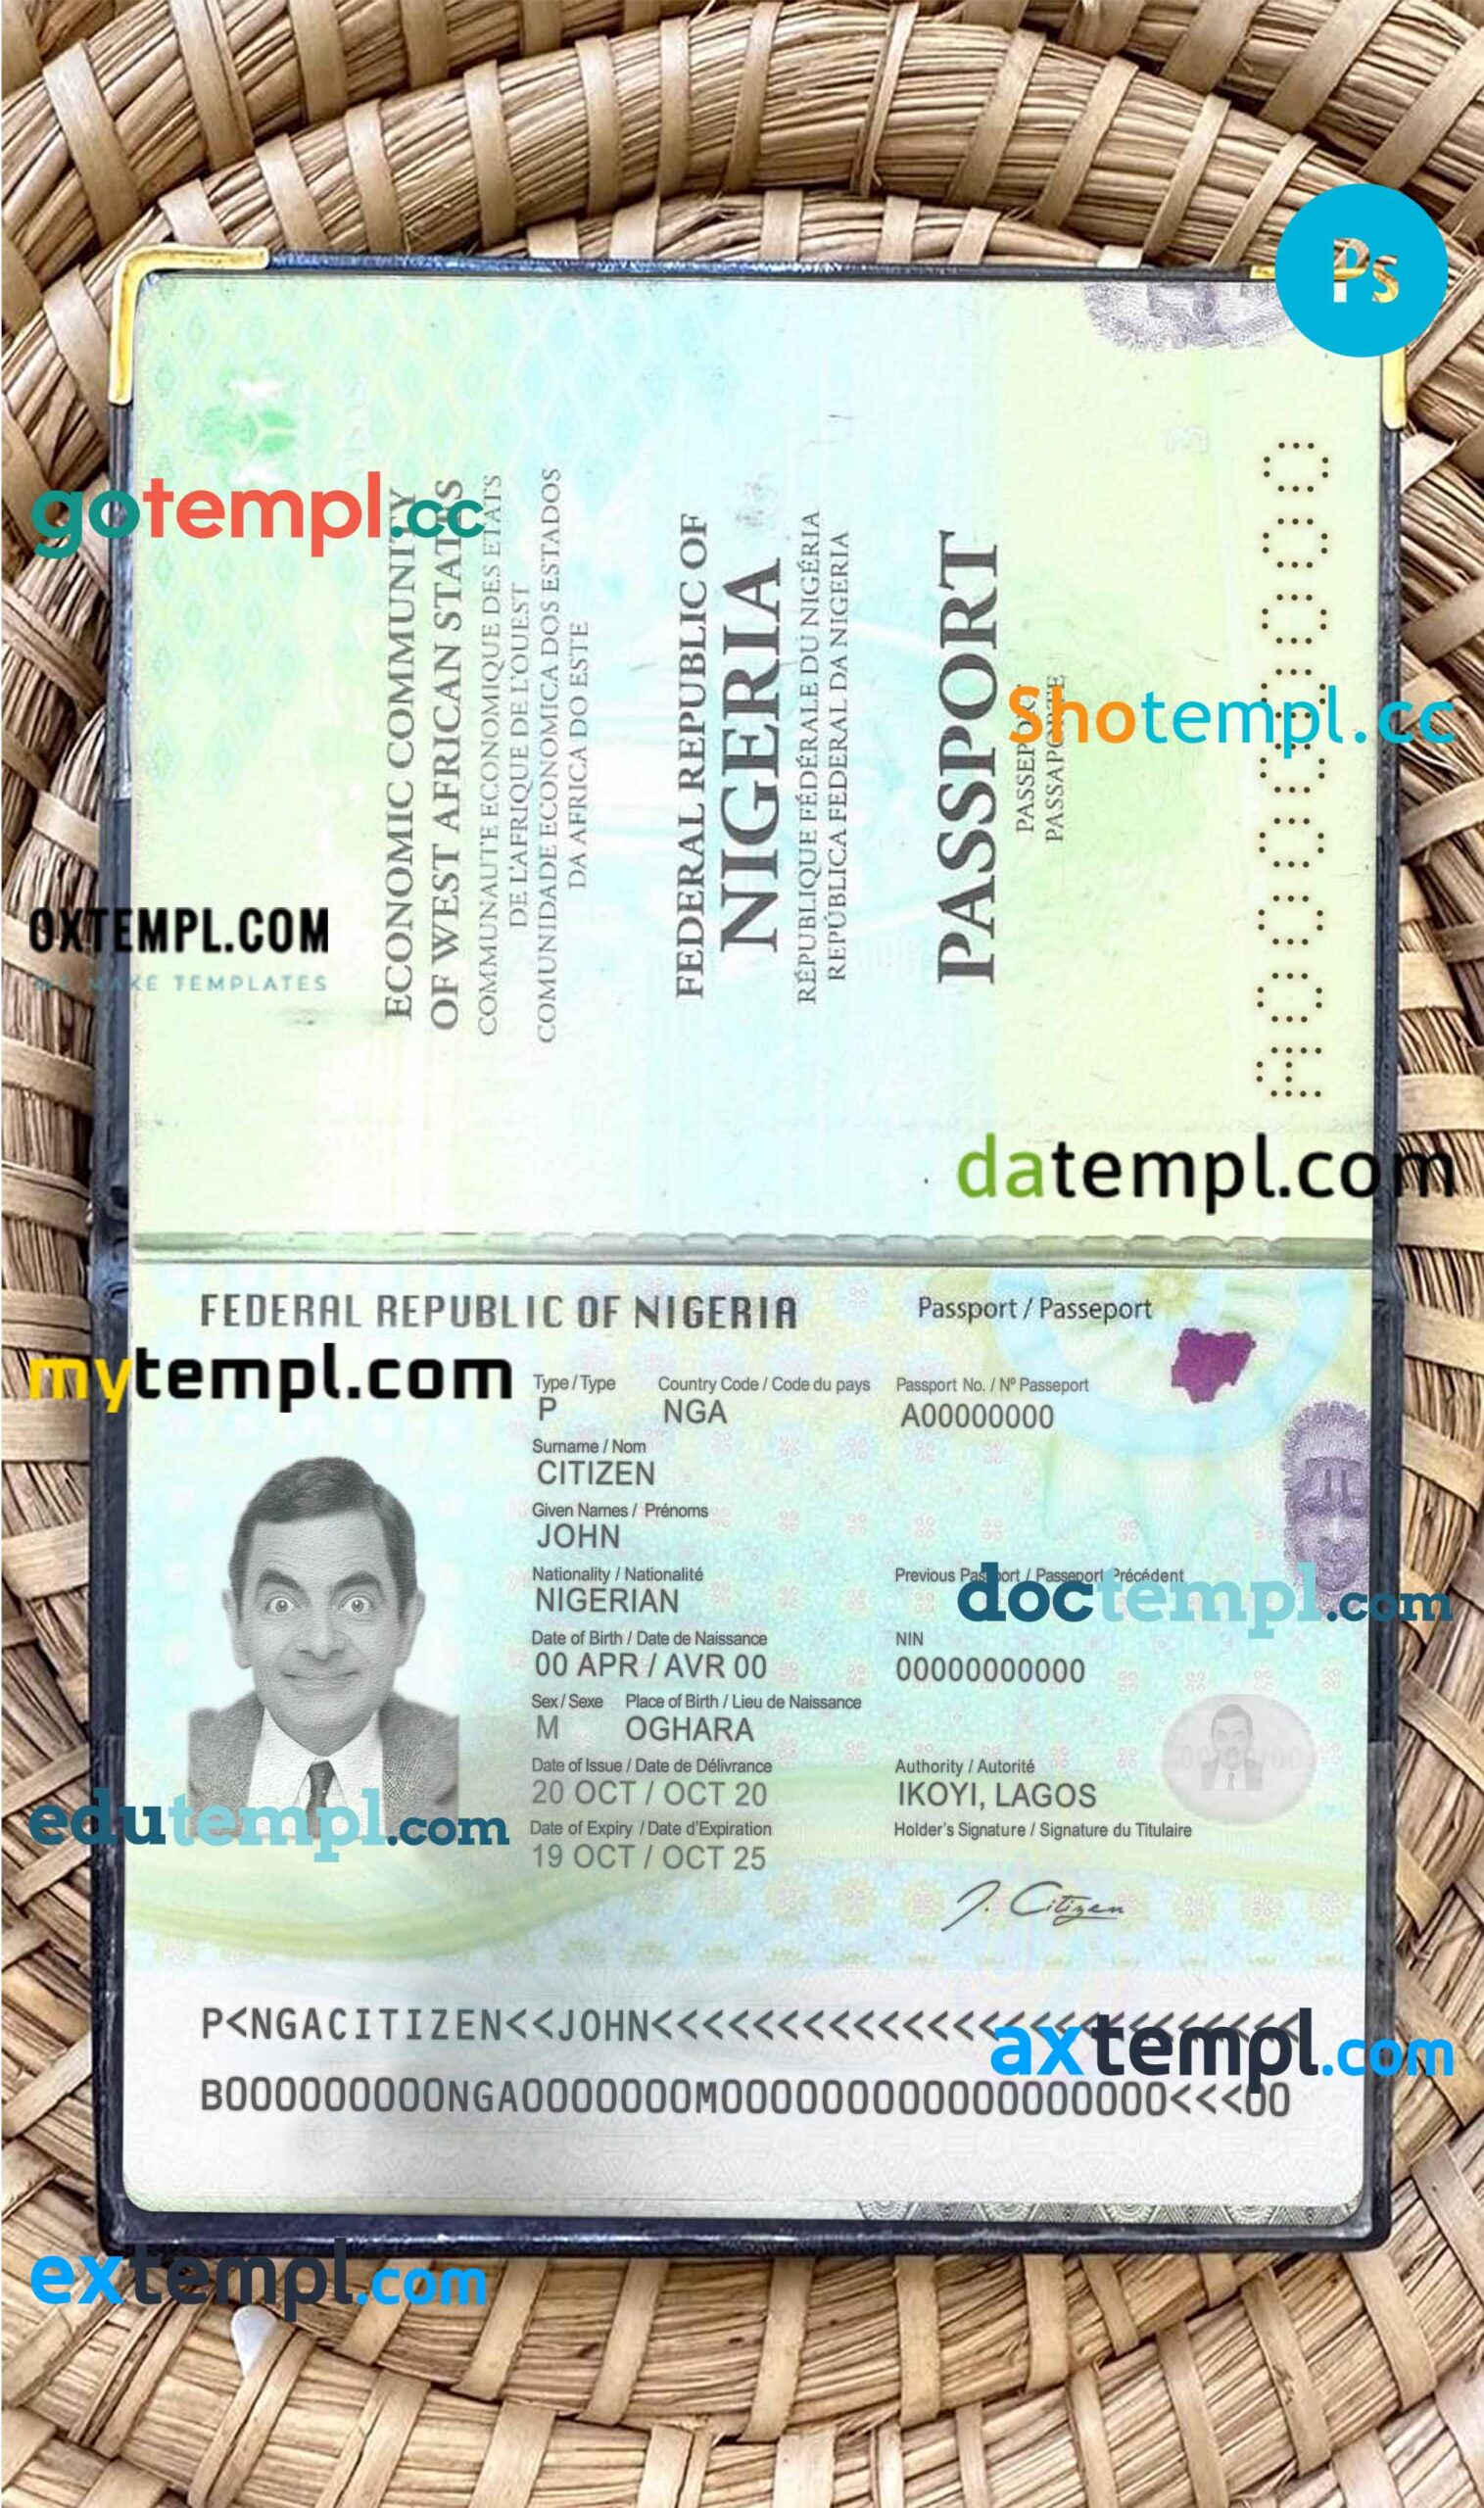 Sri Lanka Amana bank visa signature card, fully editable template in PSD format